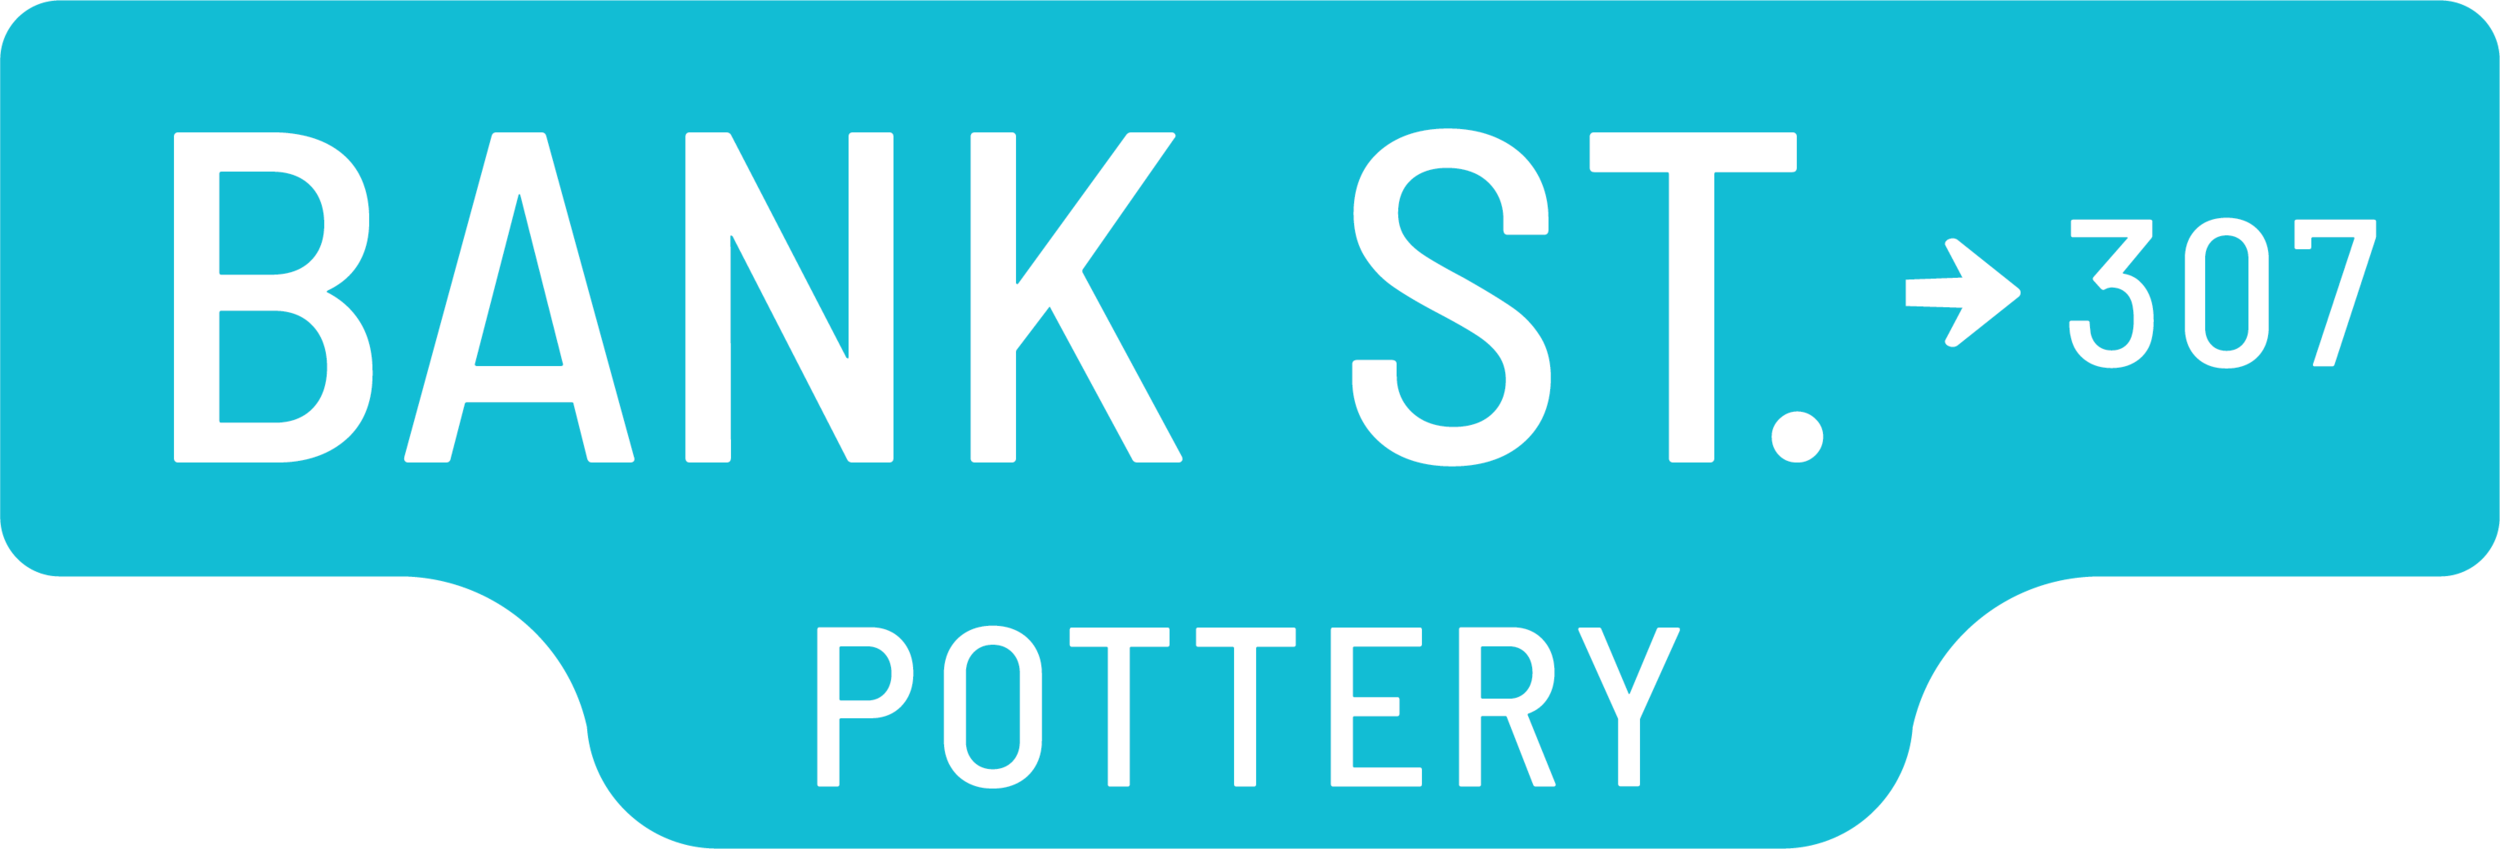 Bank Street Pottery